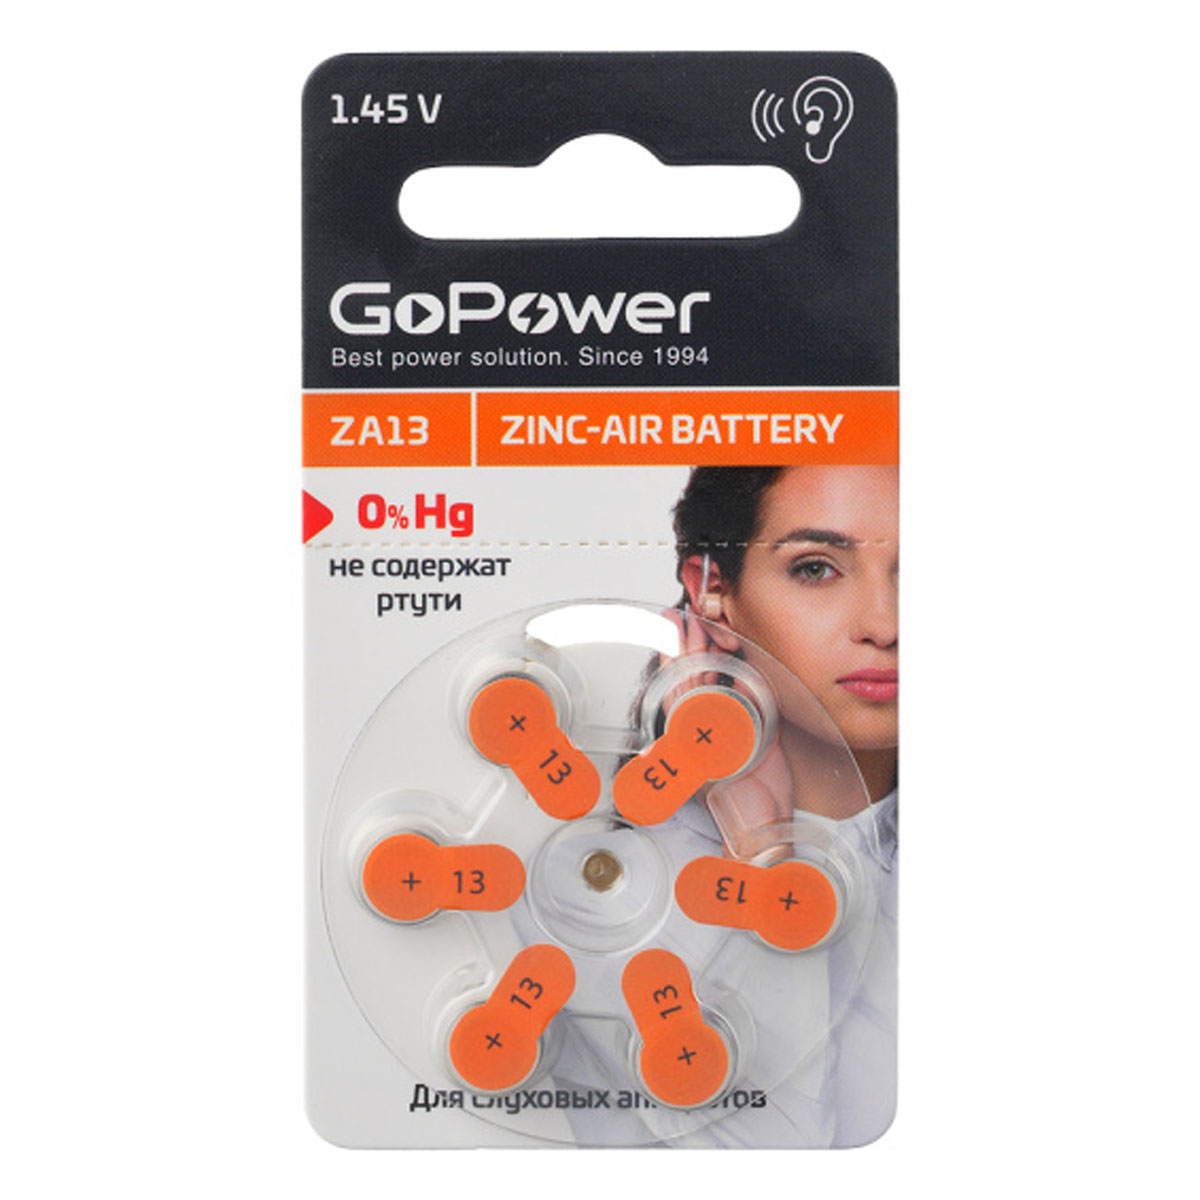 Батарейка GoPower ZA13 (PR48, V13A, DA13) BL6 Zinc Air 1.45V для слуховых аппаратов